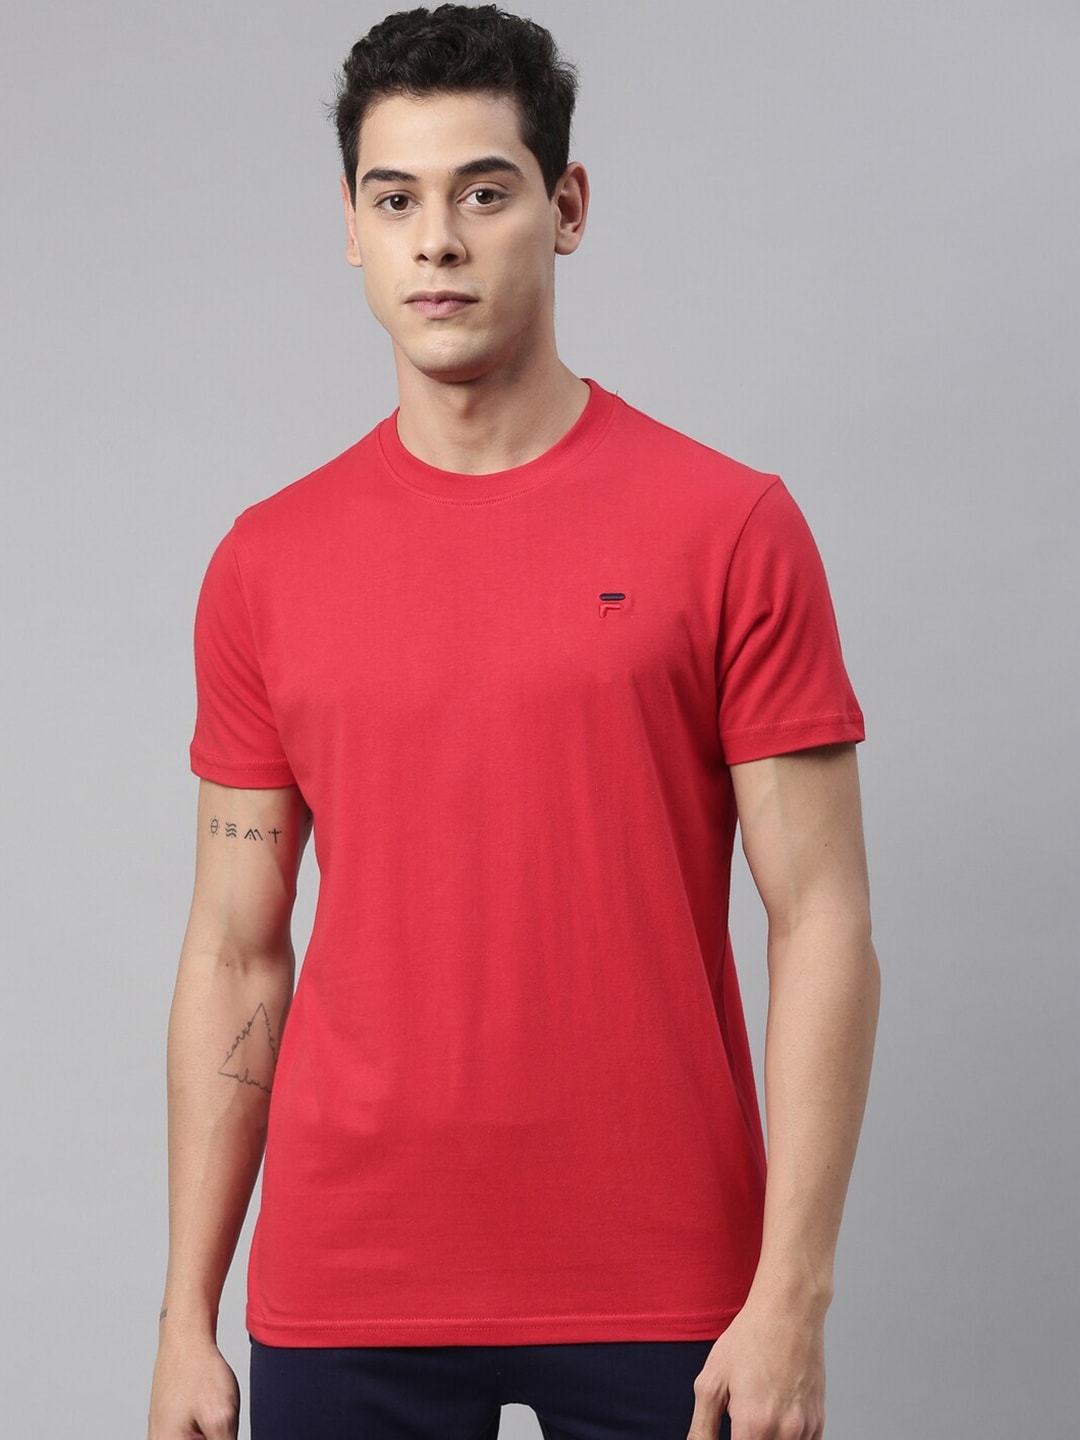 Men's Red Cotton T-Shirts